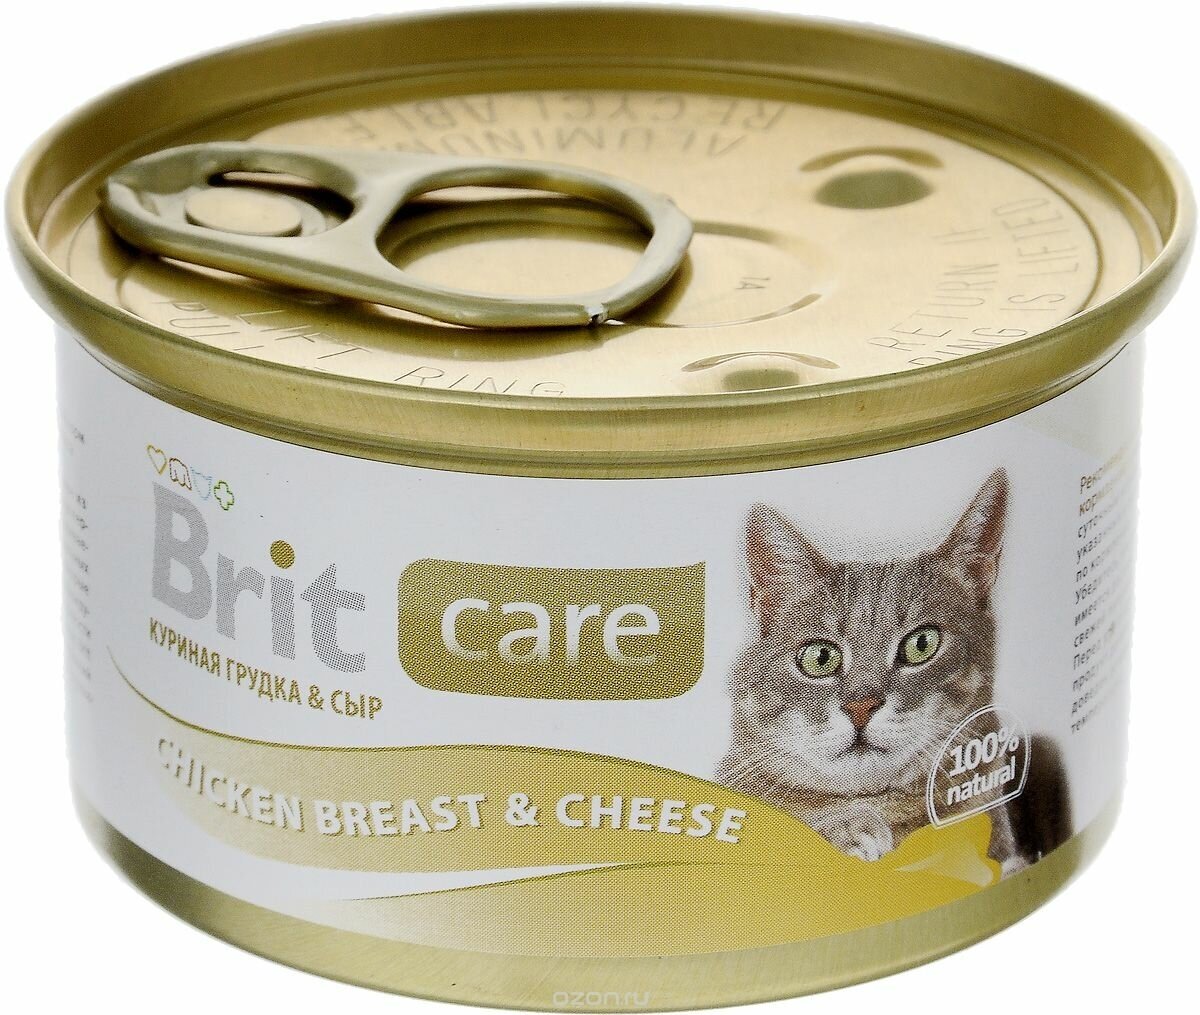 Консервы Brit Care "Chicken Breast & Cheese" для кошек, куриная грудка в сыре, 80 г - фотография № 7